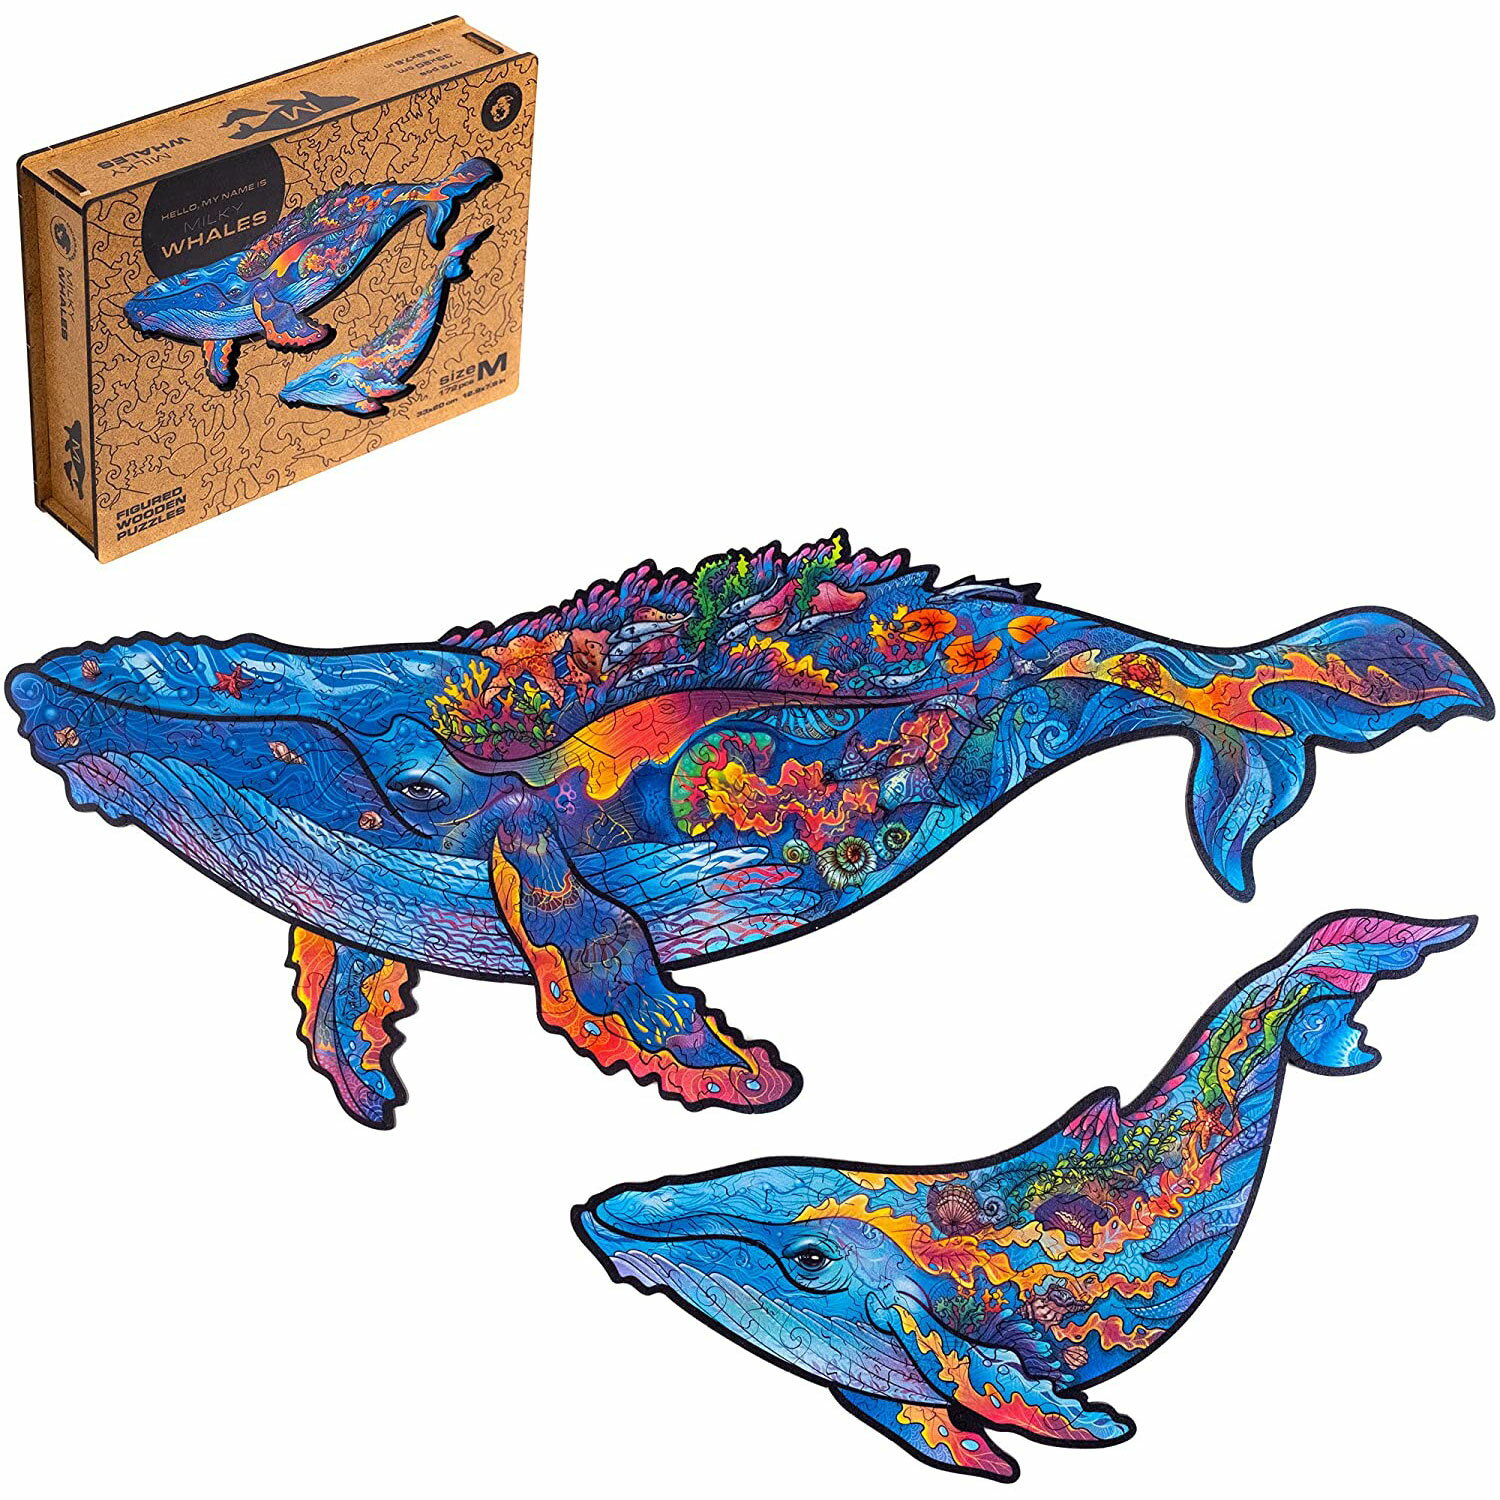 47.UNIDRAGON パズル 大人 木製パズル 木製 ジグソー 子供 最高 ギフト ユニーク 形 プレゼント ジグソーパズル ピース チャーミング 可愛い 綺麗 かわいい クジラ ミルキー ホエールズ 木製フィギュアパズル 33 x 20 cm 172 ピース 中